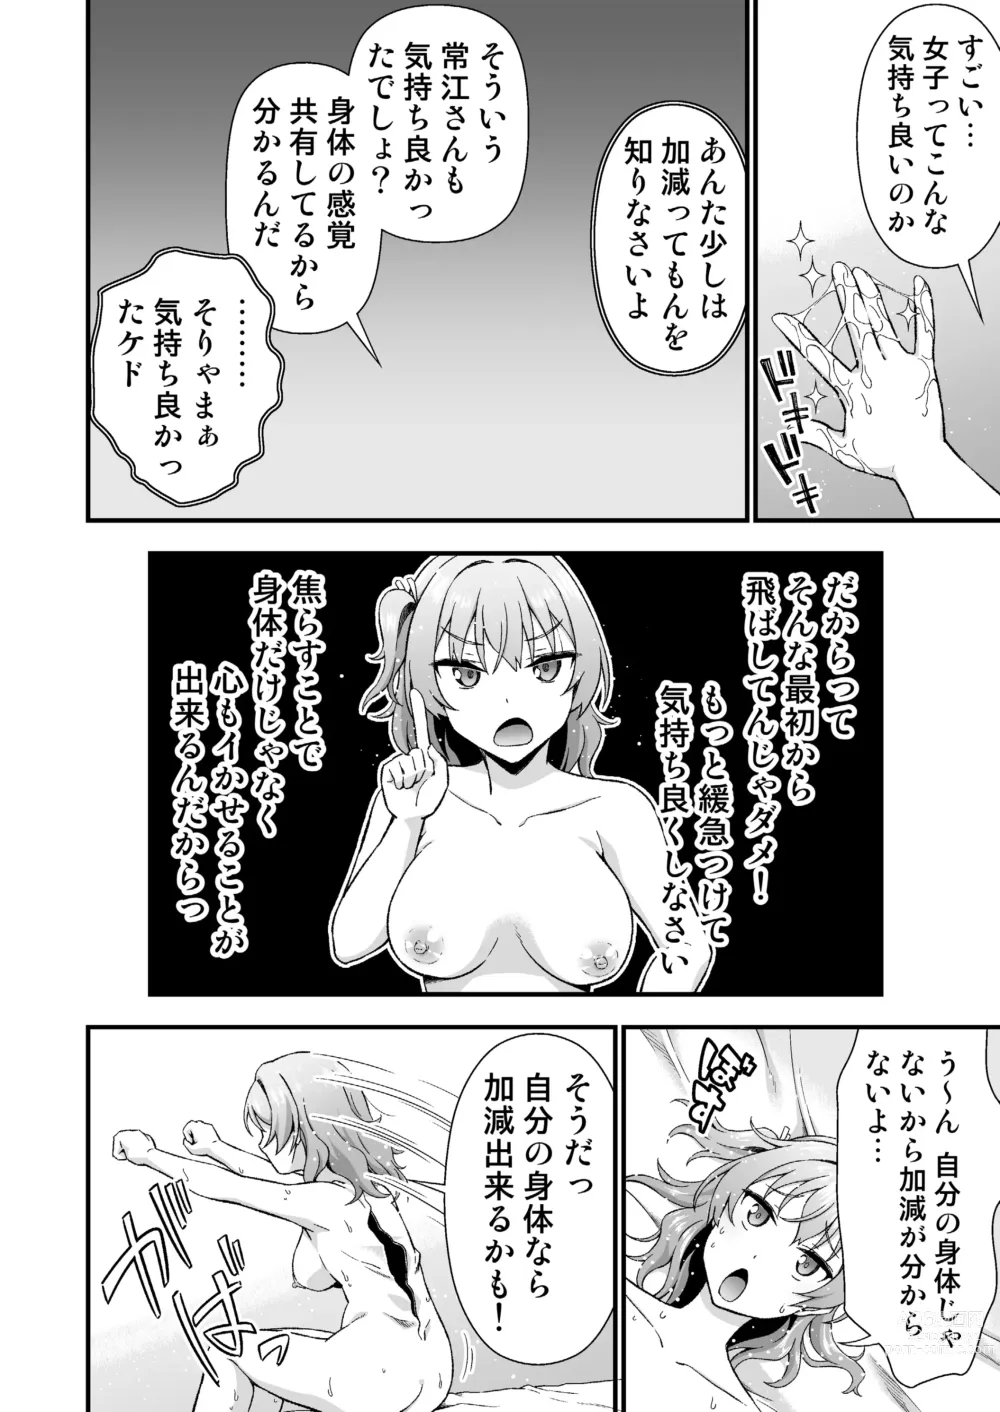 Page 12 of doujinshi Kawa-ka daiko o kawari